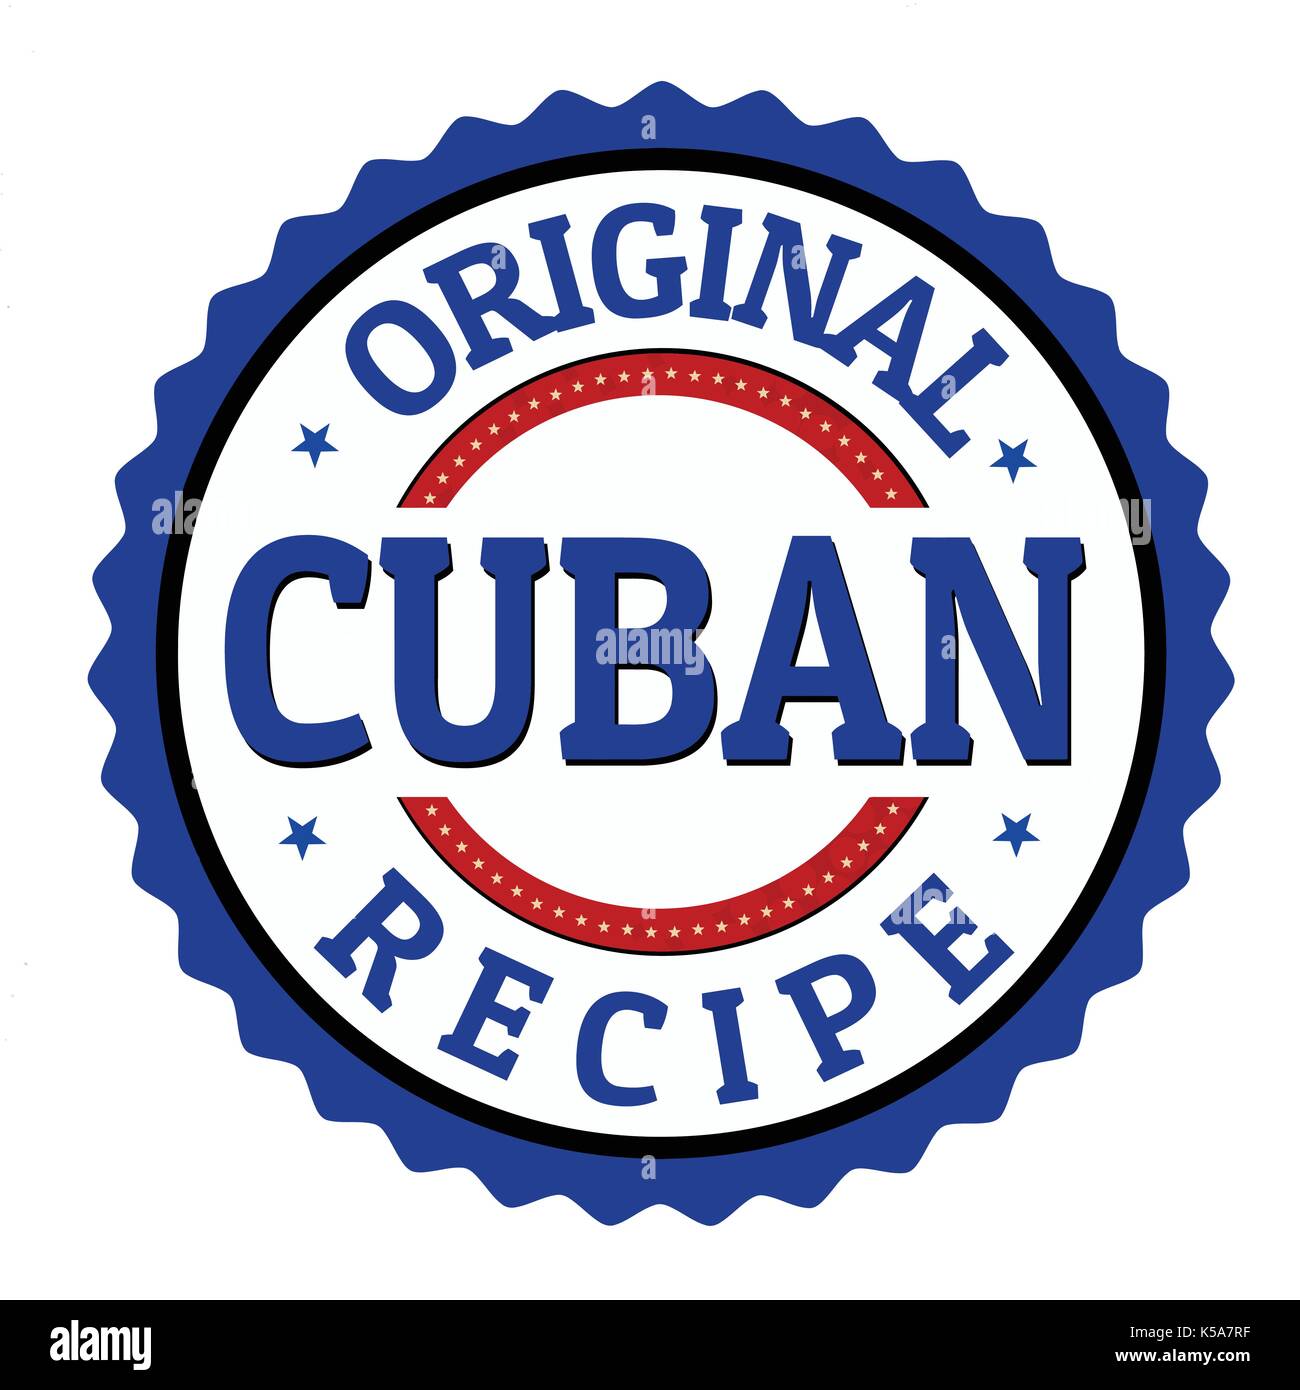 Original cuban recipe label or sticker on white background, vector illustration Stock Vector